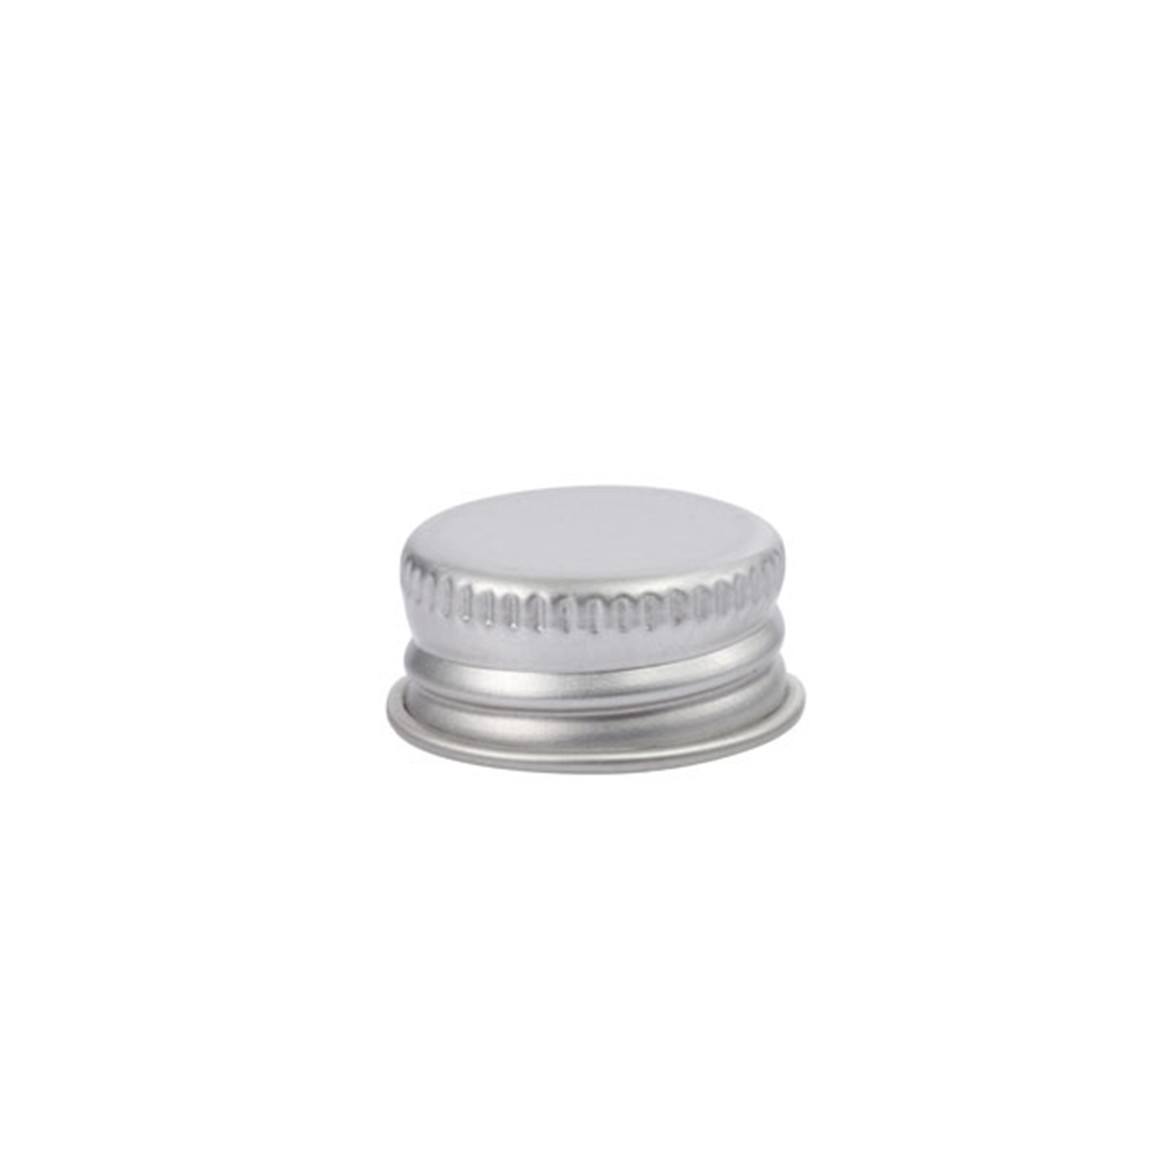 Disc Top custom bottle cap packaging skincare container